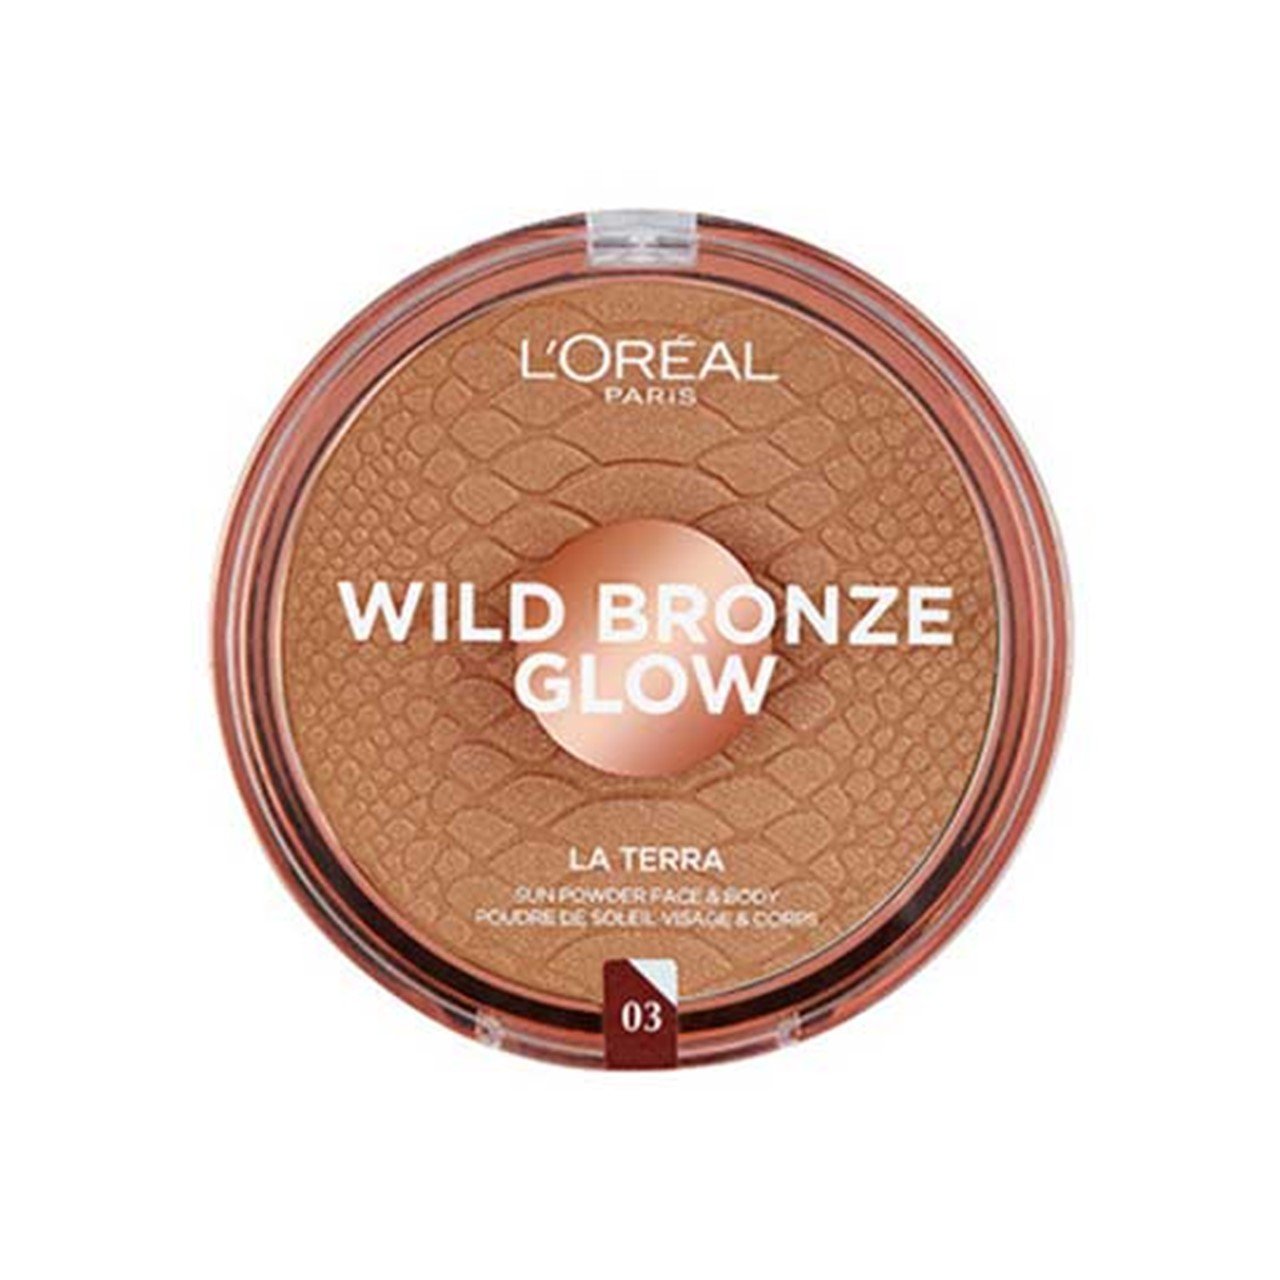 L'Oréal Paris Wild Bronze Glow La Terra 03 Medium Bronze 18g (0.63oz)